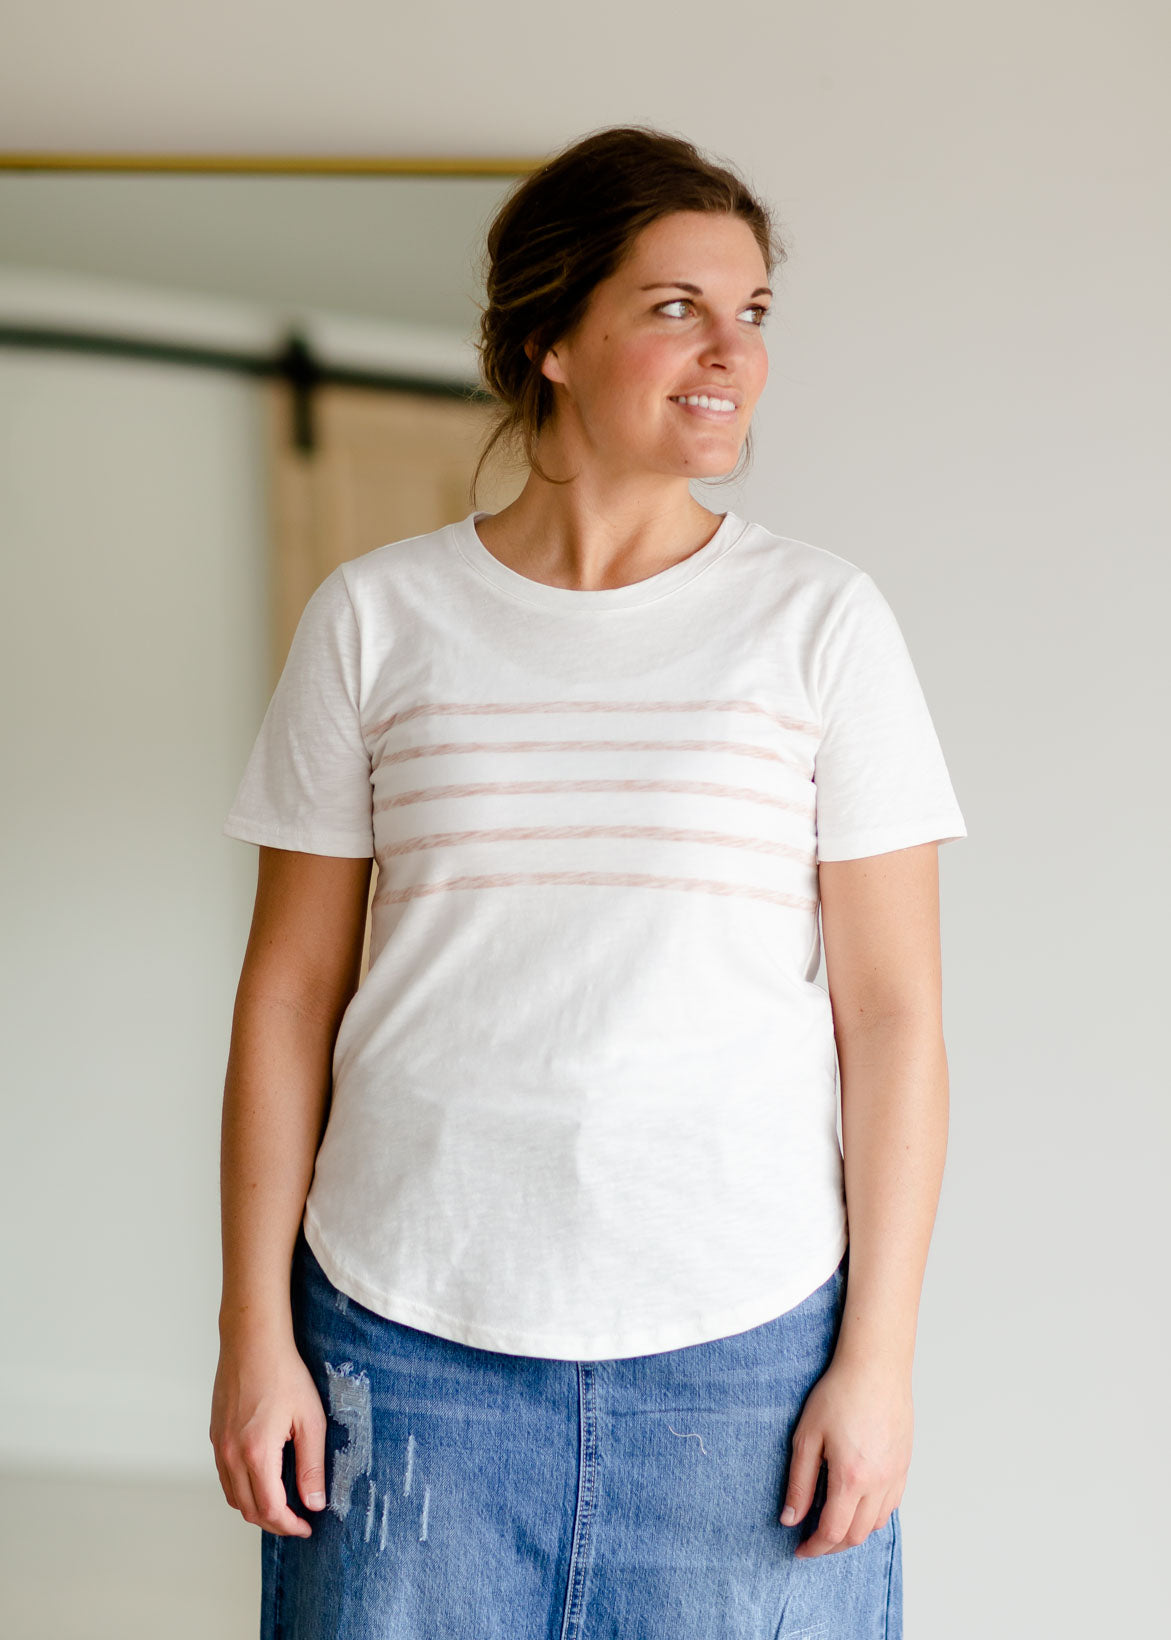 The Raelynn Short Sleeve Striped Top Shirt Thread & Supply